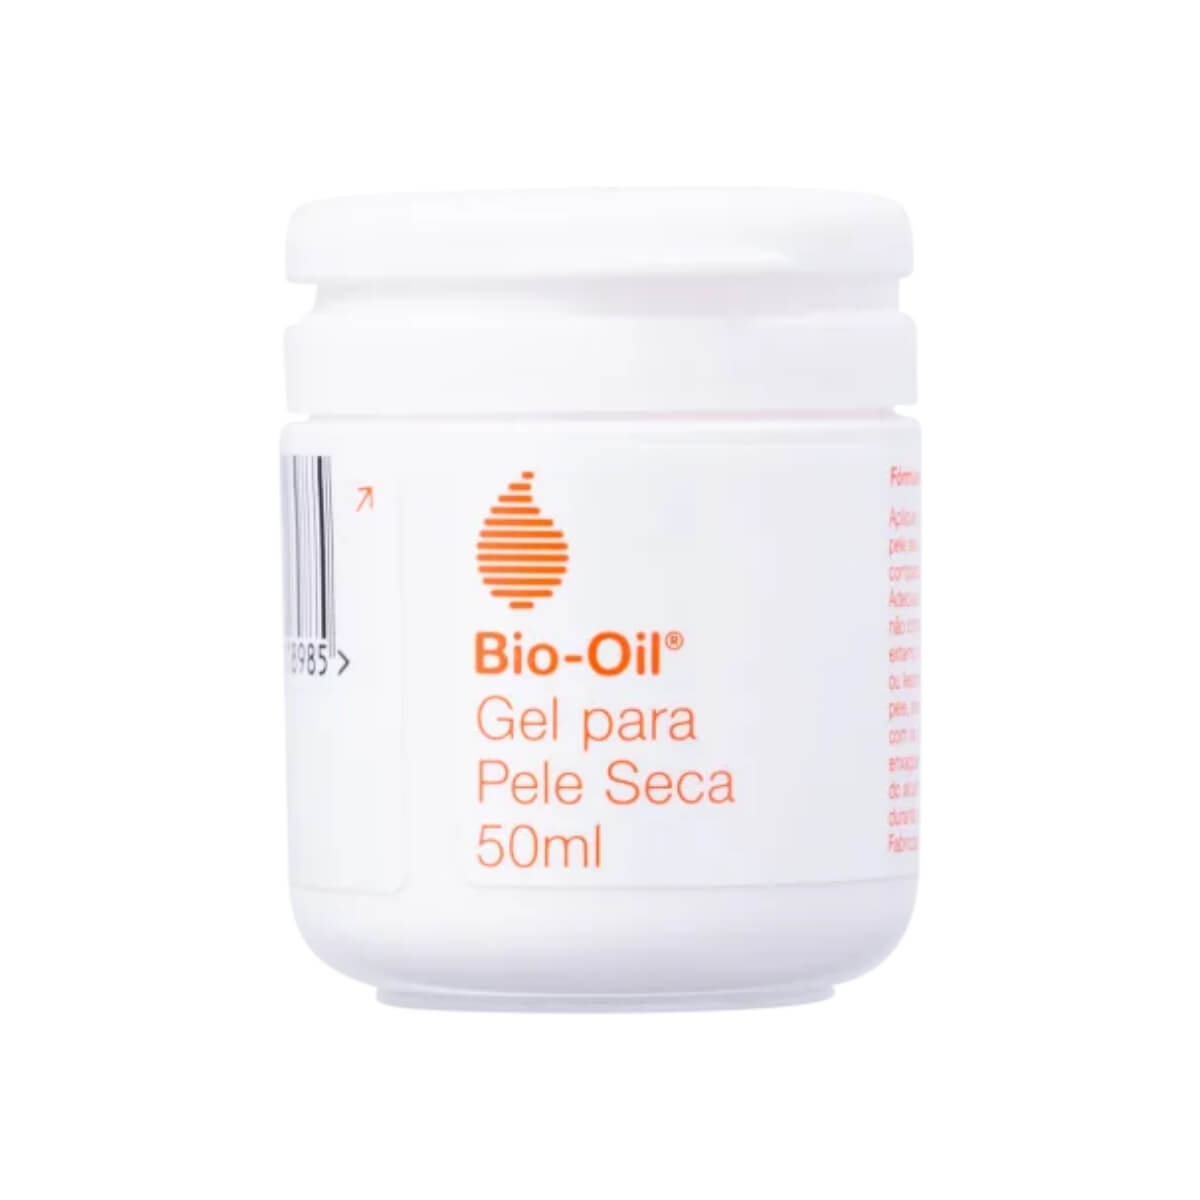 Gel Corporal Bio Oil para Pele Seca com 50ml 50ml